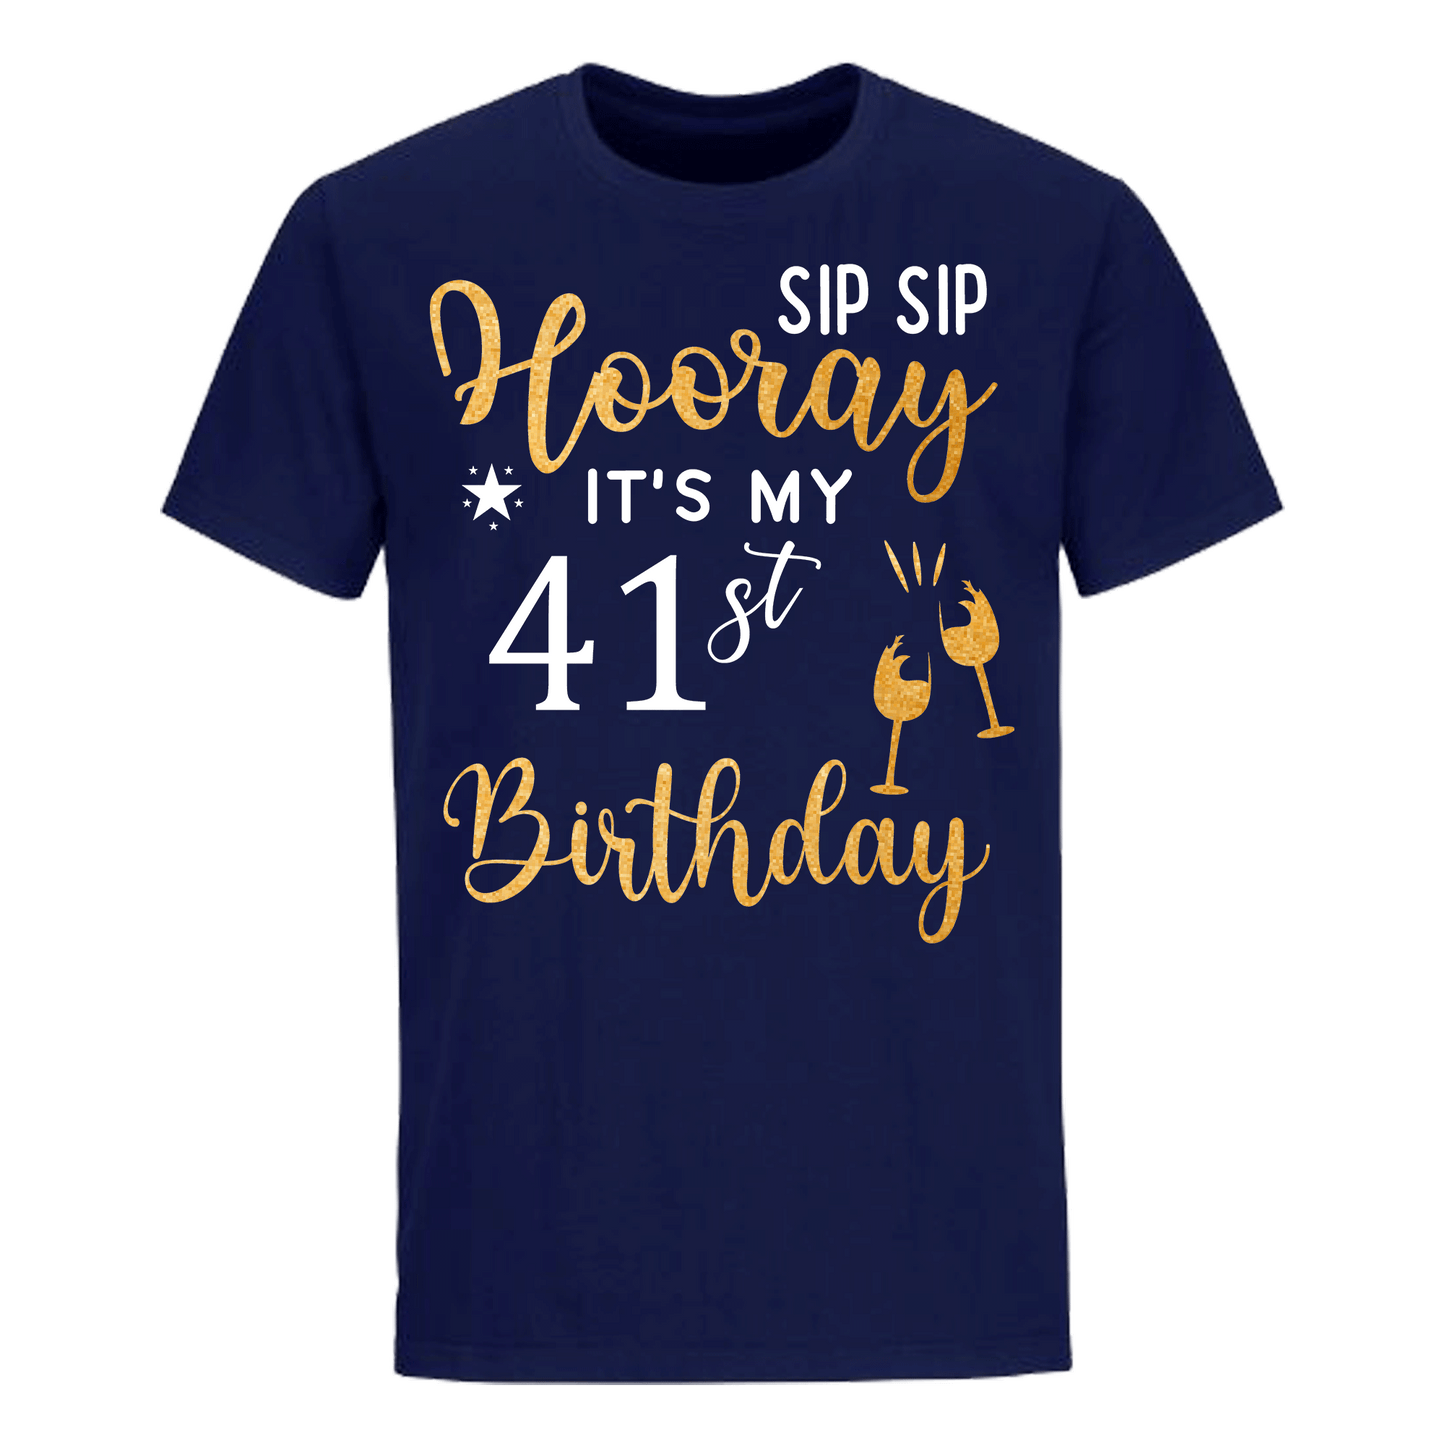 HOORAY IT'S MY 41st BIRTHDAY SHIRT